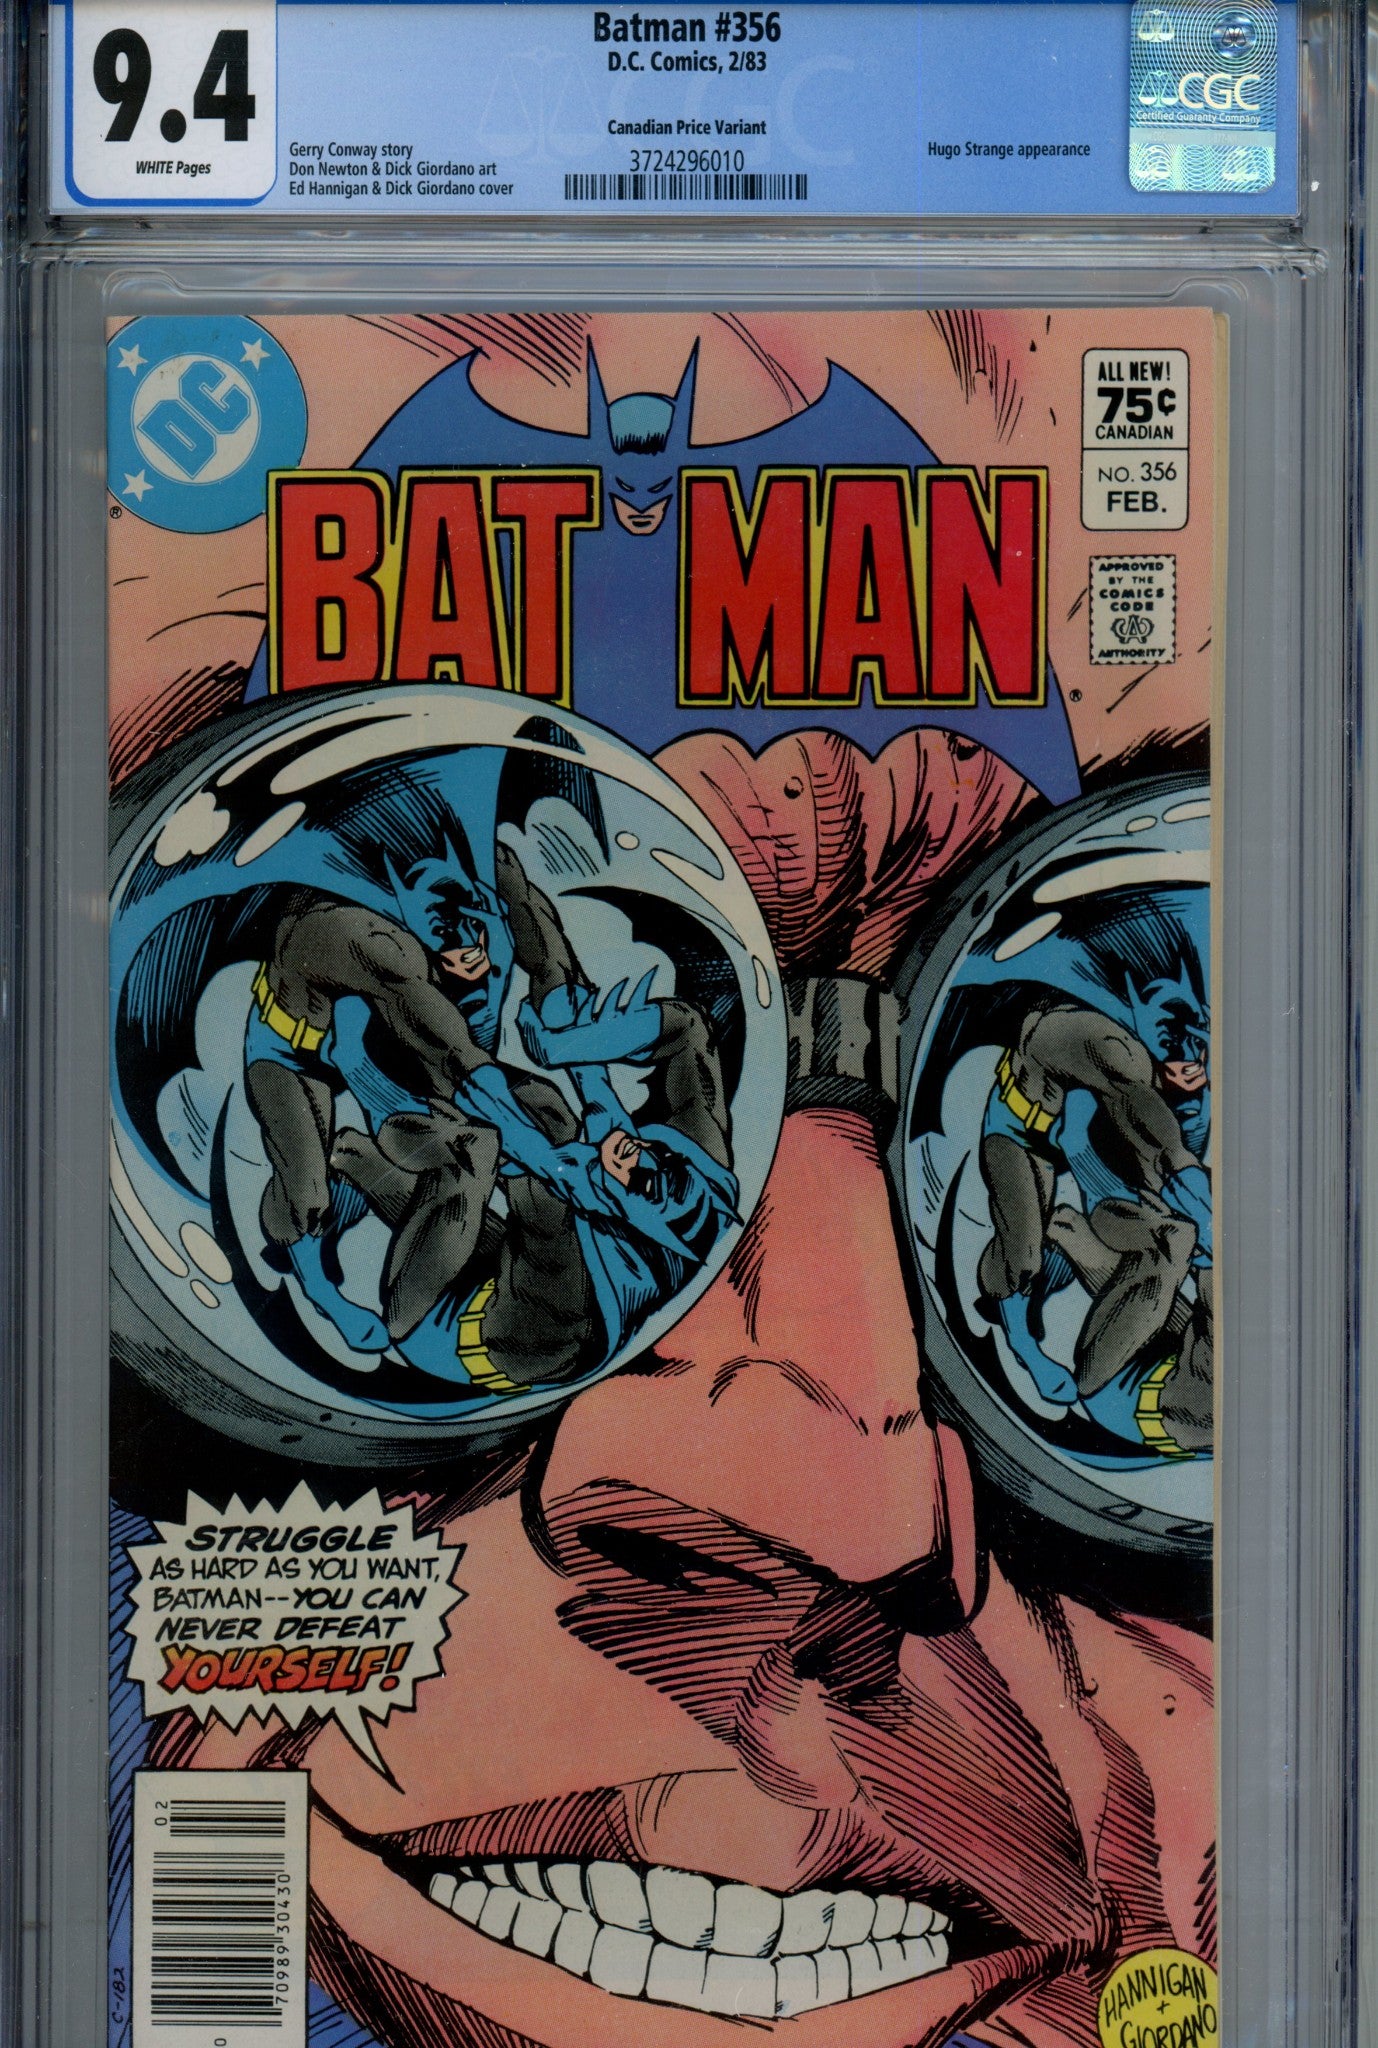 Batman Vol 1 356 Canadian Price Variant CGC 9.4 (1982)